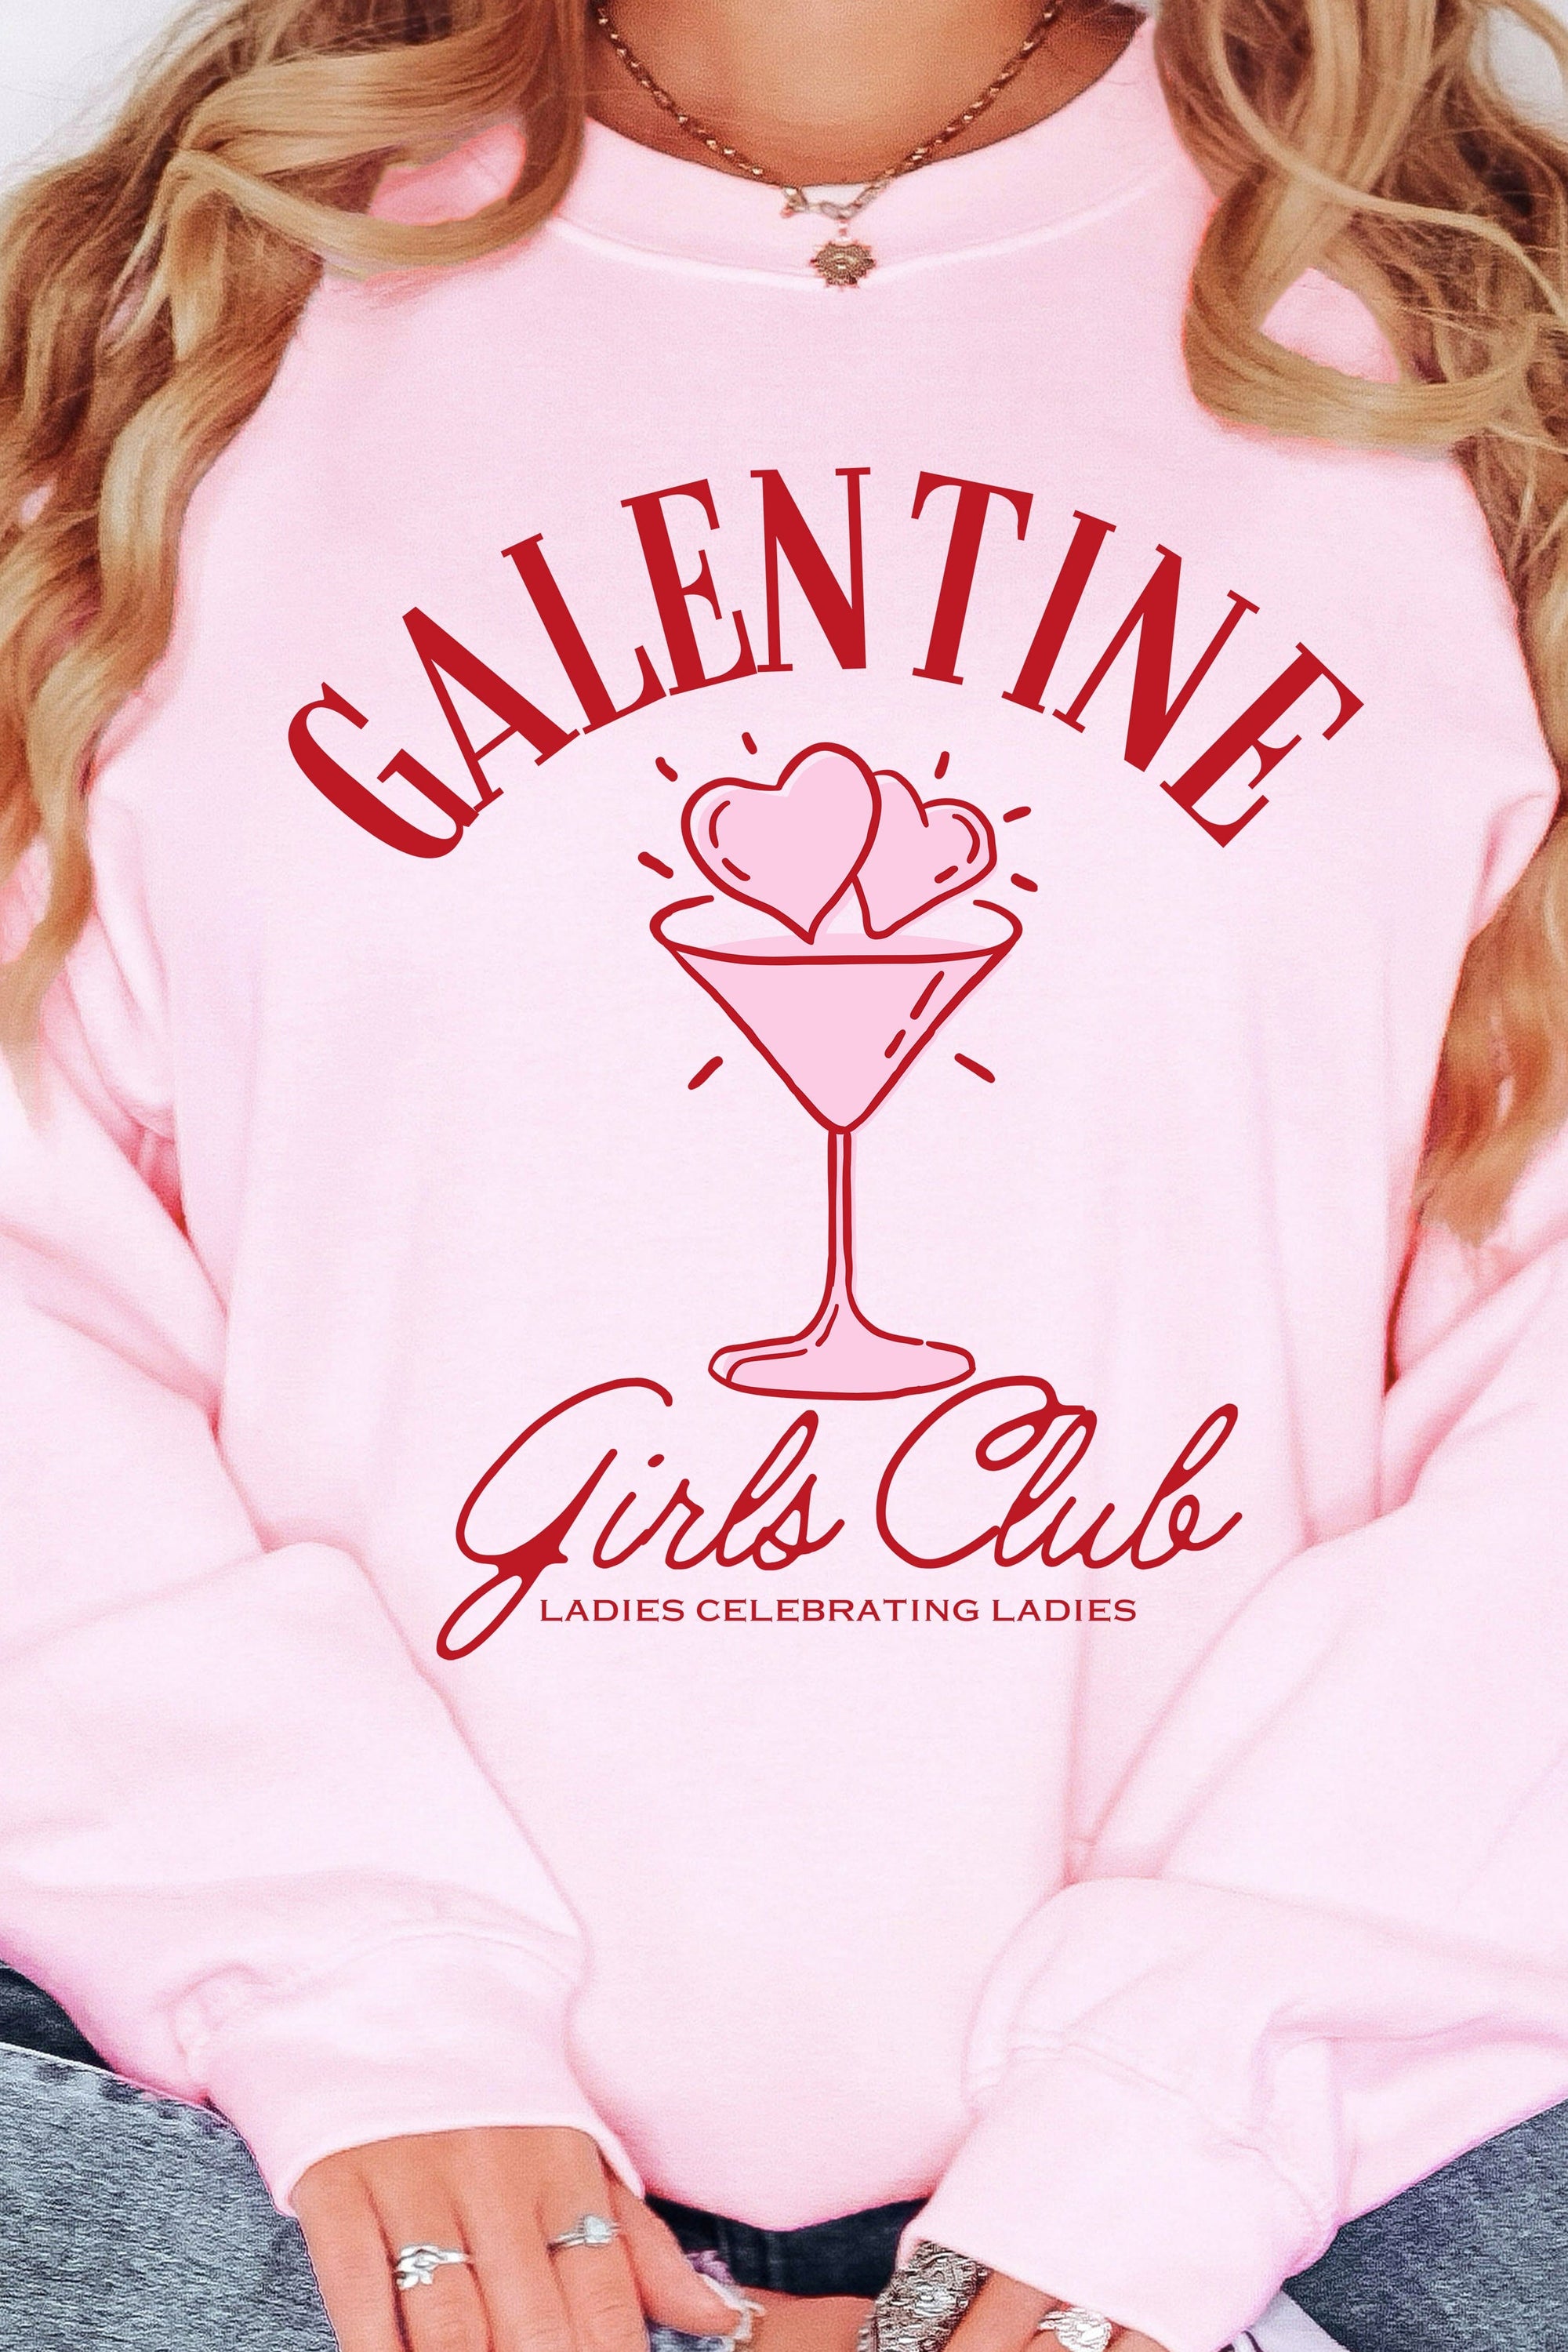 Galentine Girls Club Fleece Lined Sweatshirt